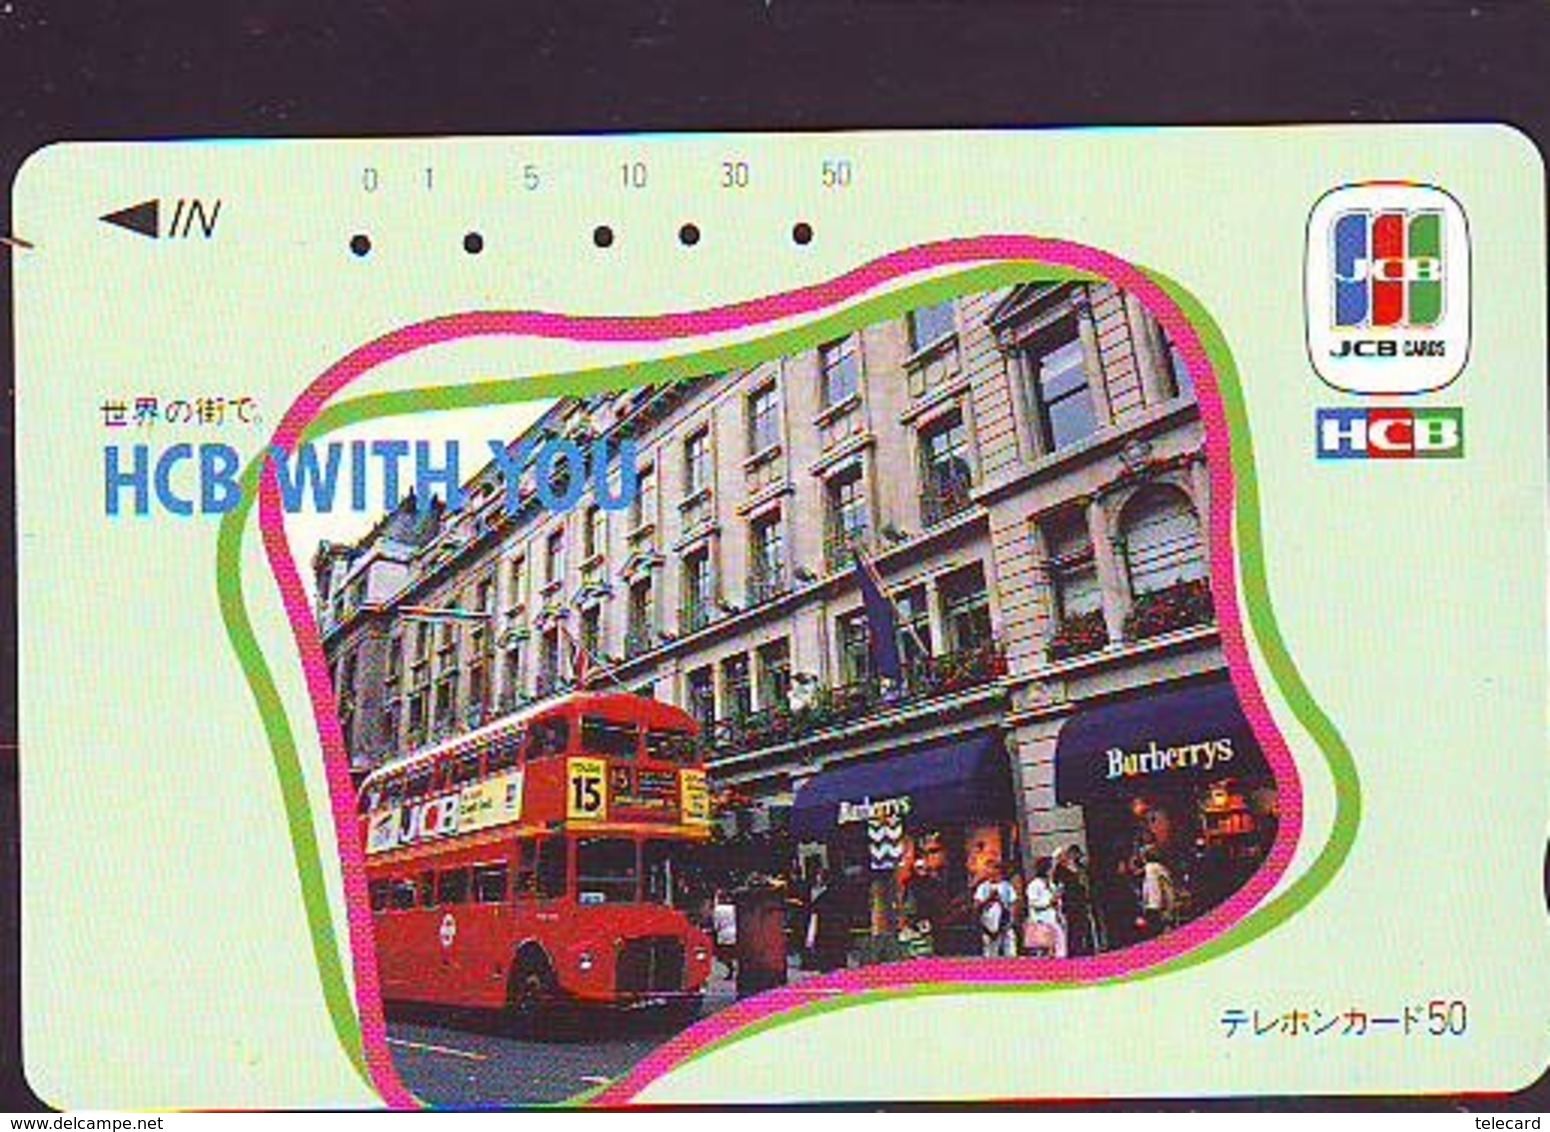 Télécarte Japon * ANGLETERRE * ENGLAND * LONDON * Double-decker Bus  (373) GREAT BRITAIN Related *  Phonecard Japan * - Landscapes